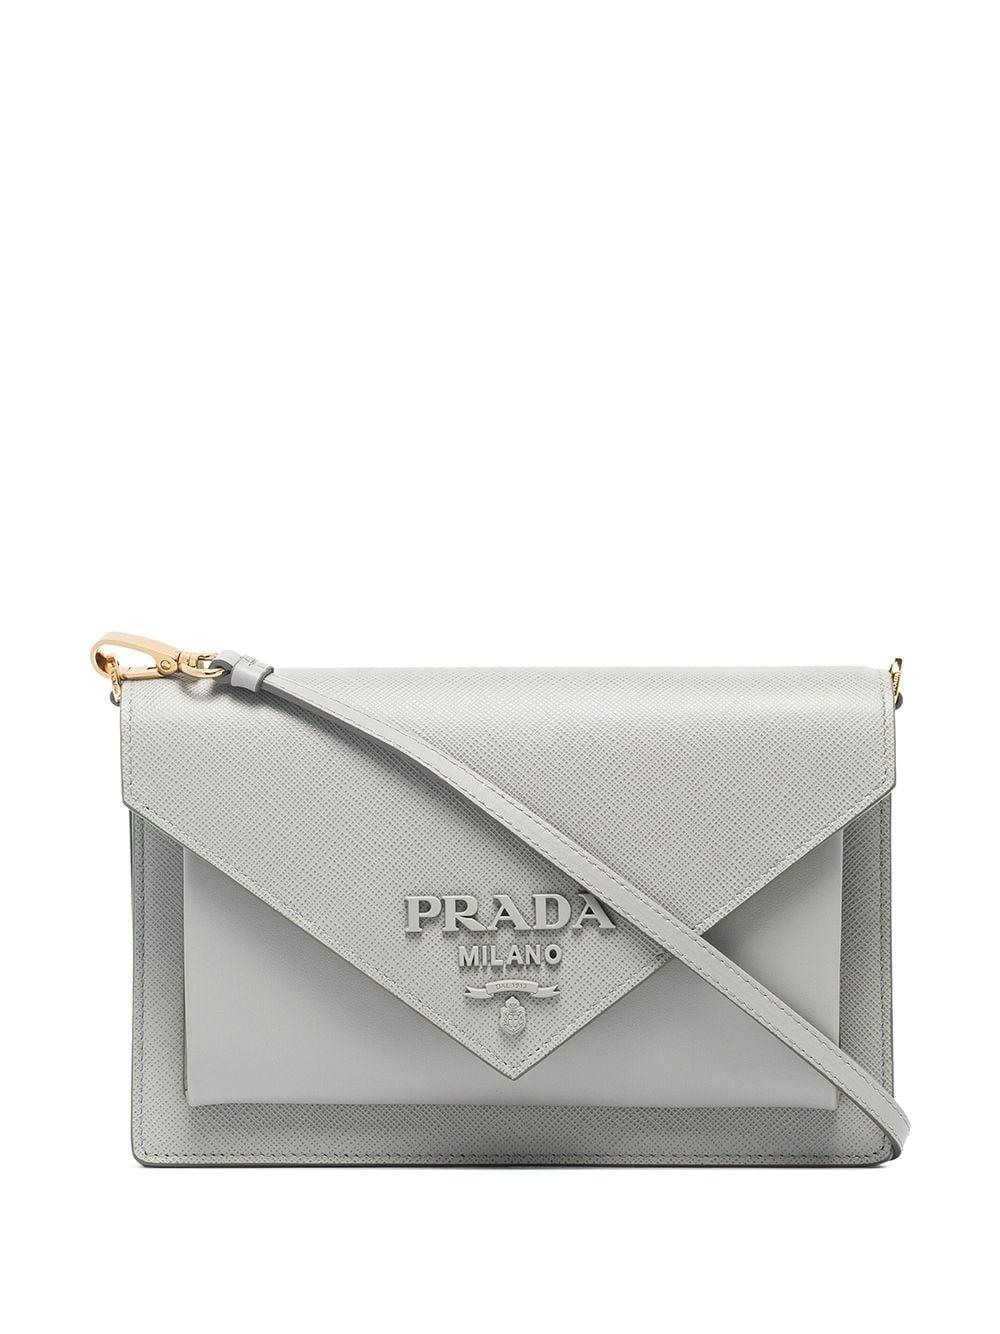 Prada Envelope Leather Cross Body Bag in Gray